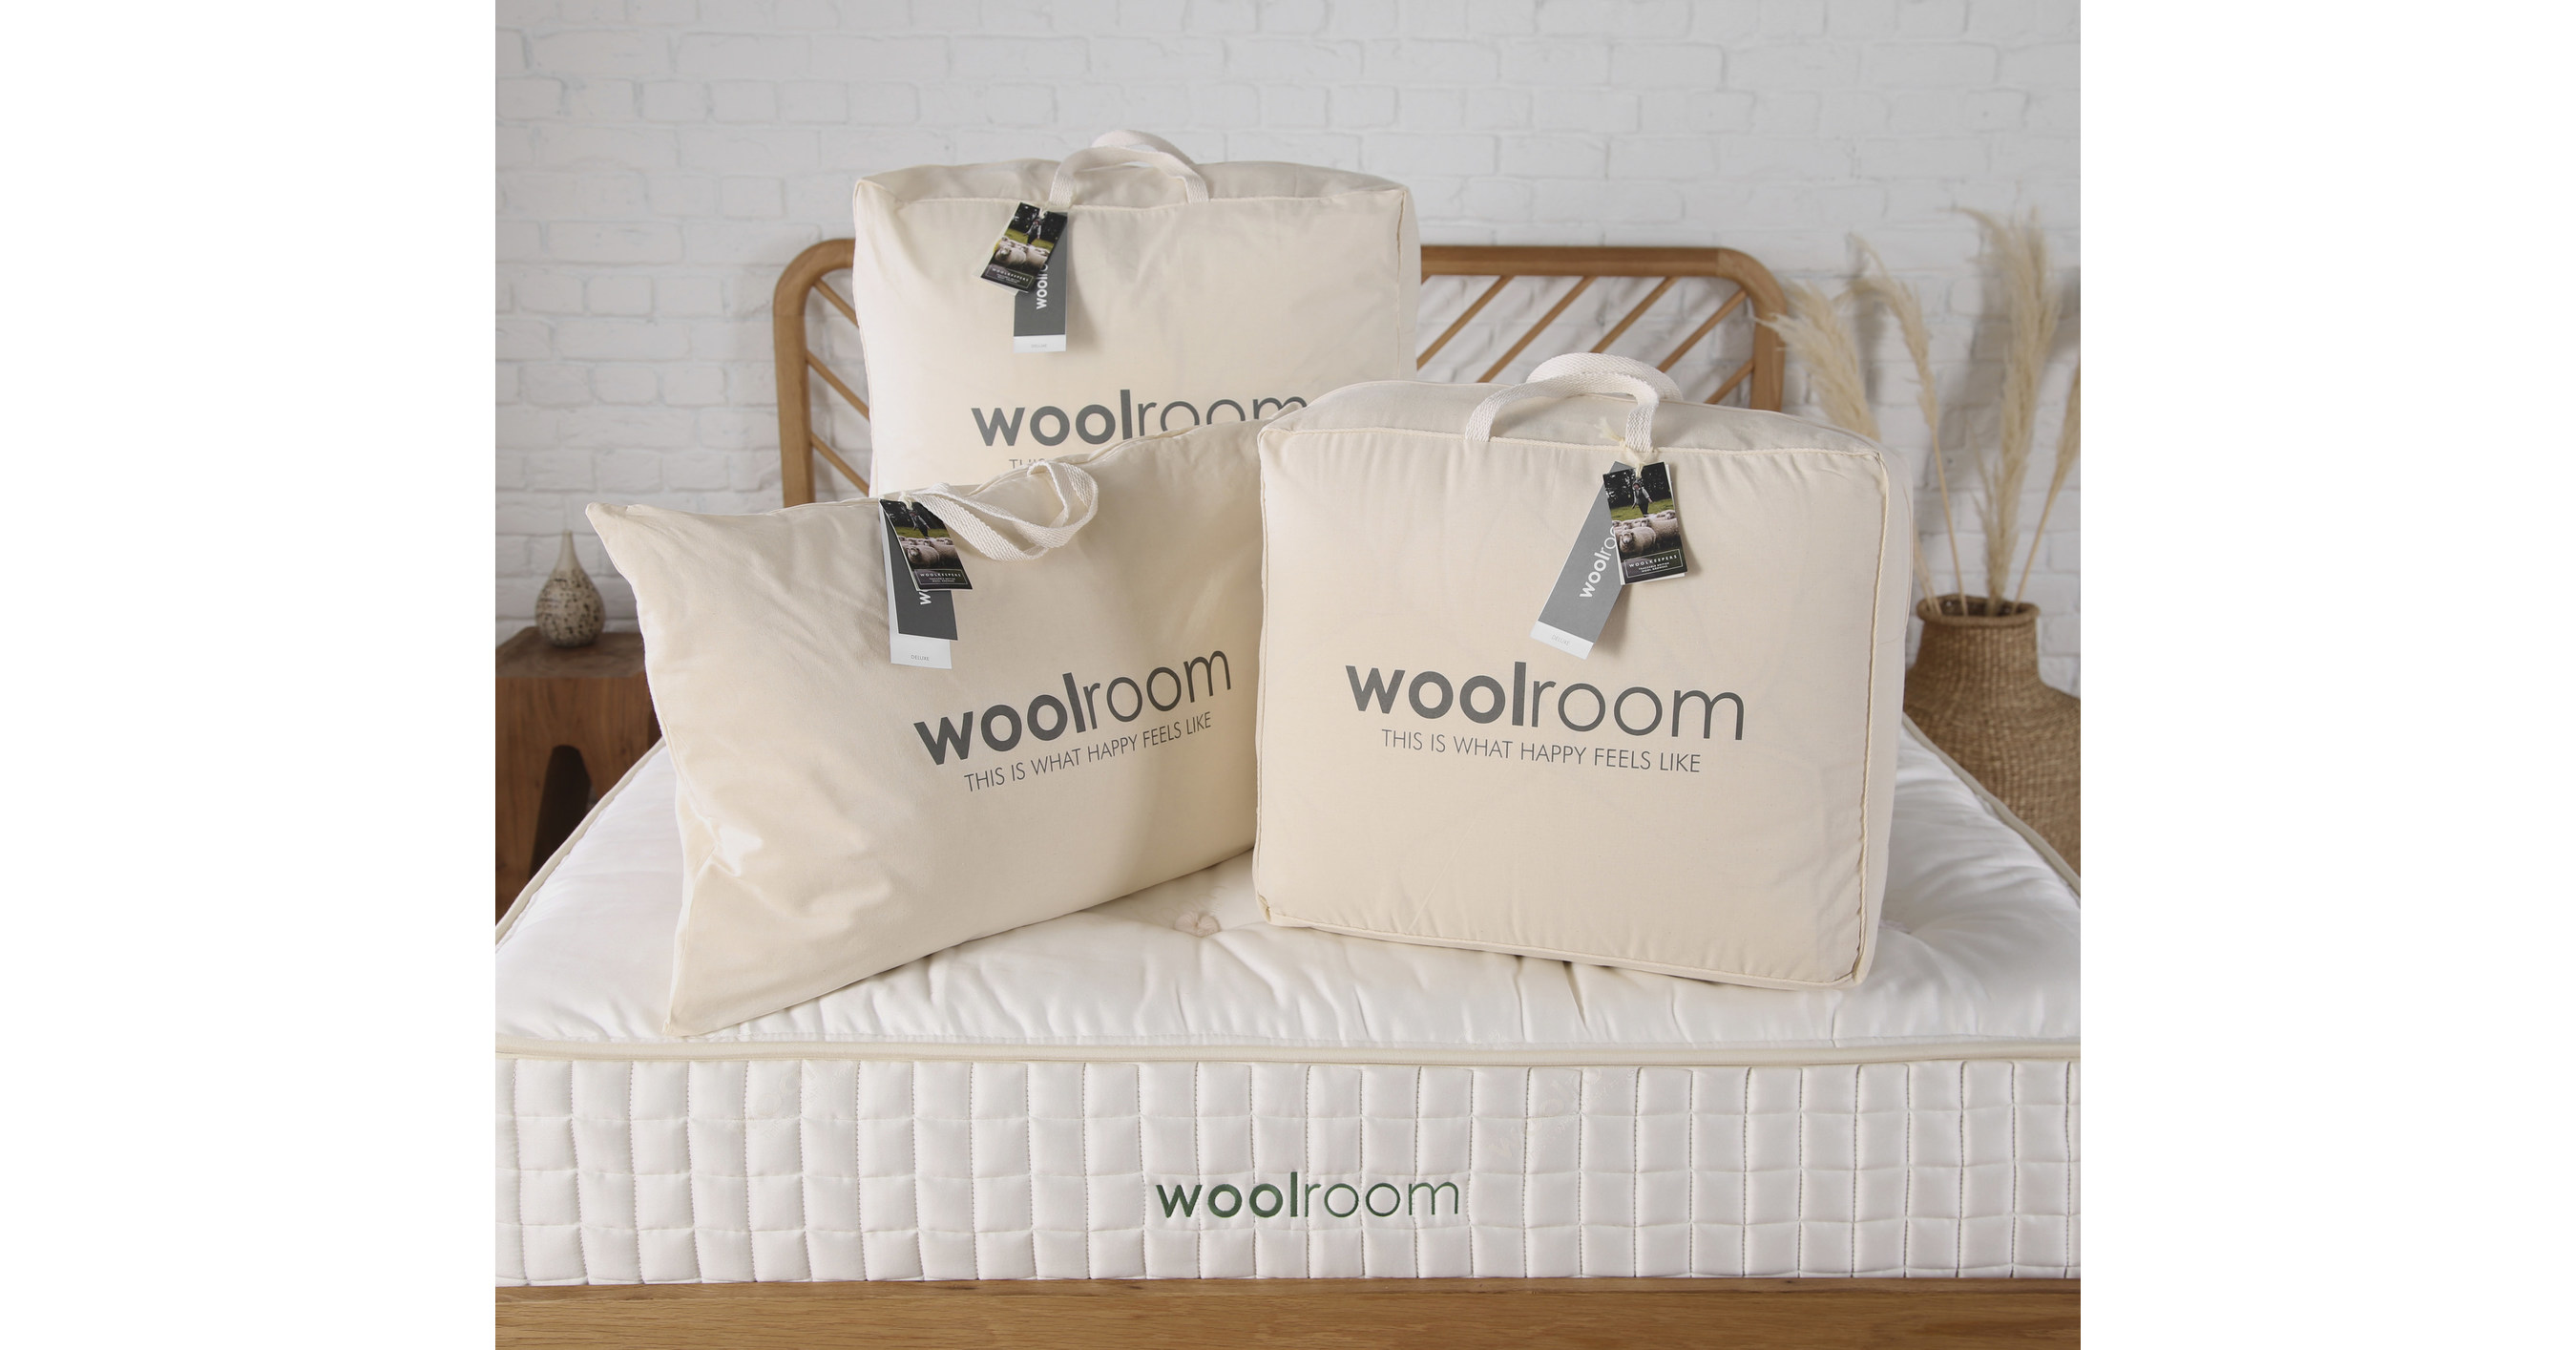 the woolroom mattress topper